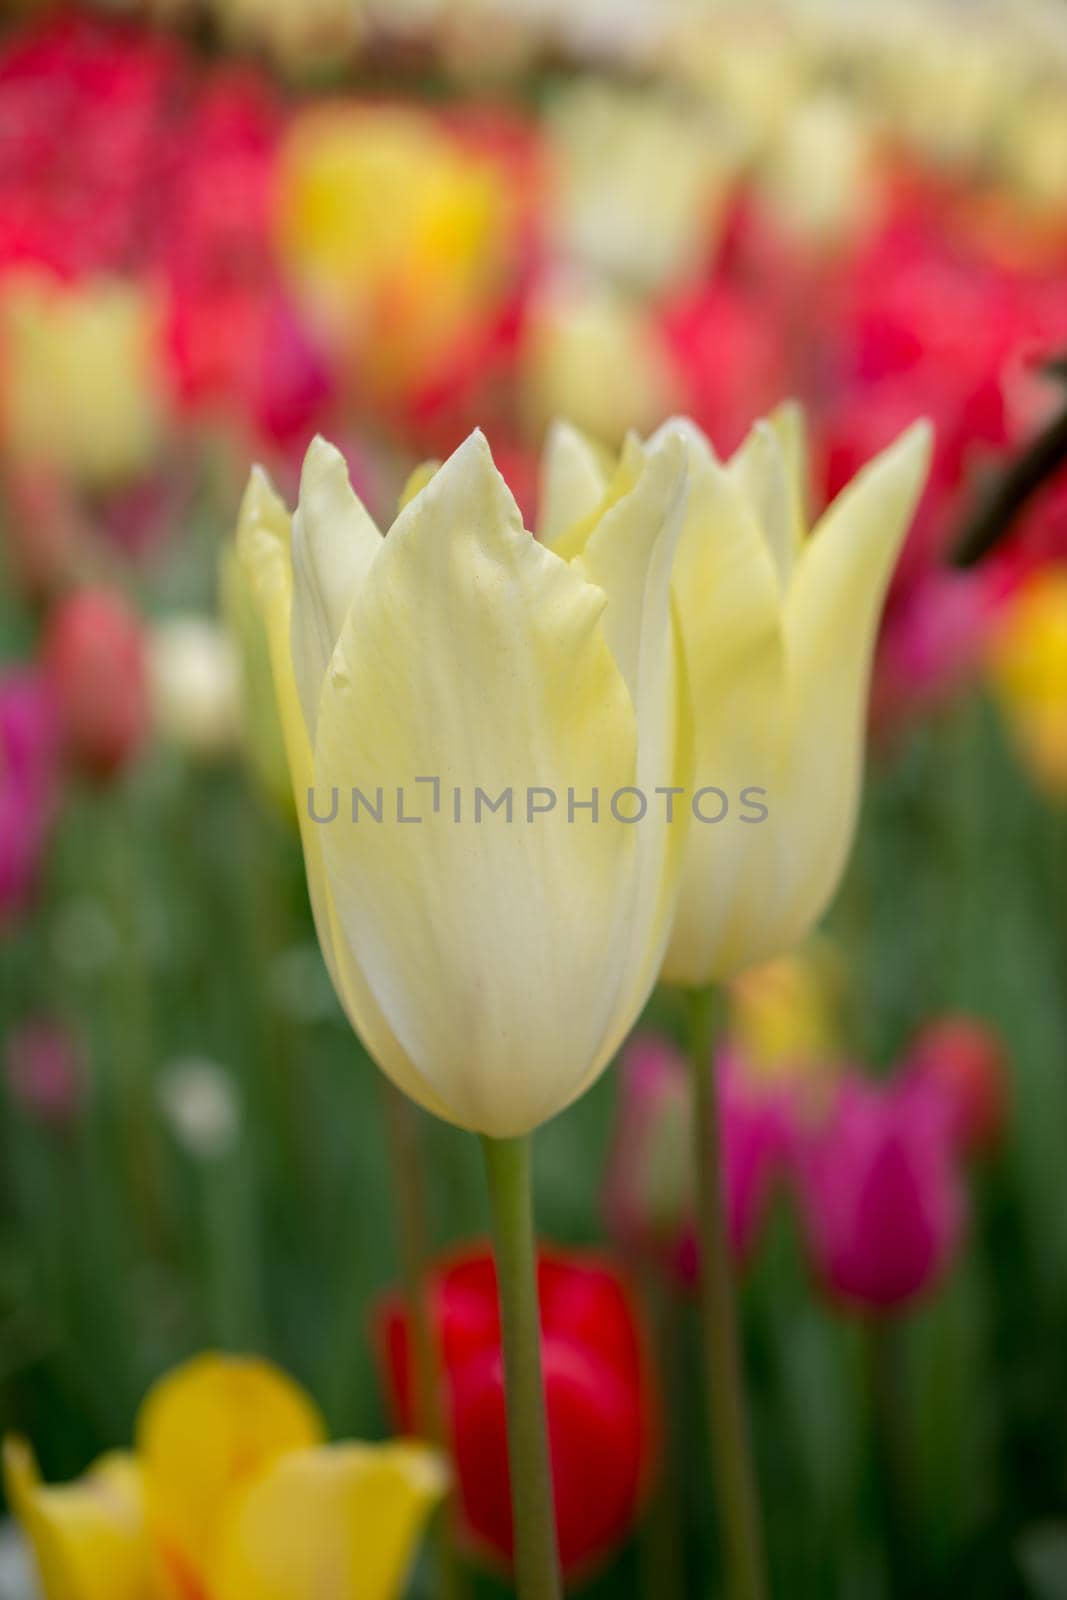 Colorful tulip flower bloom in the garden by berkay